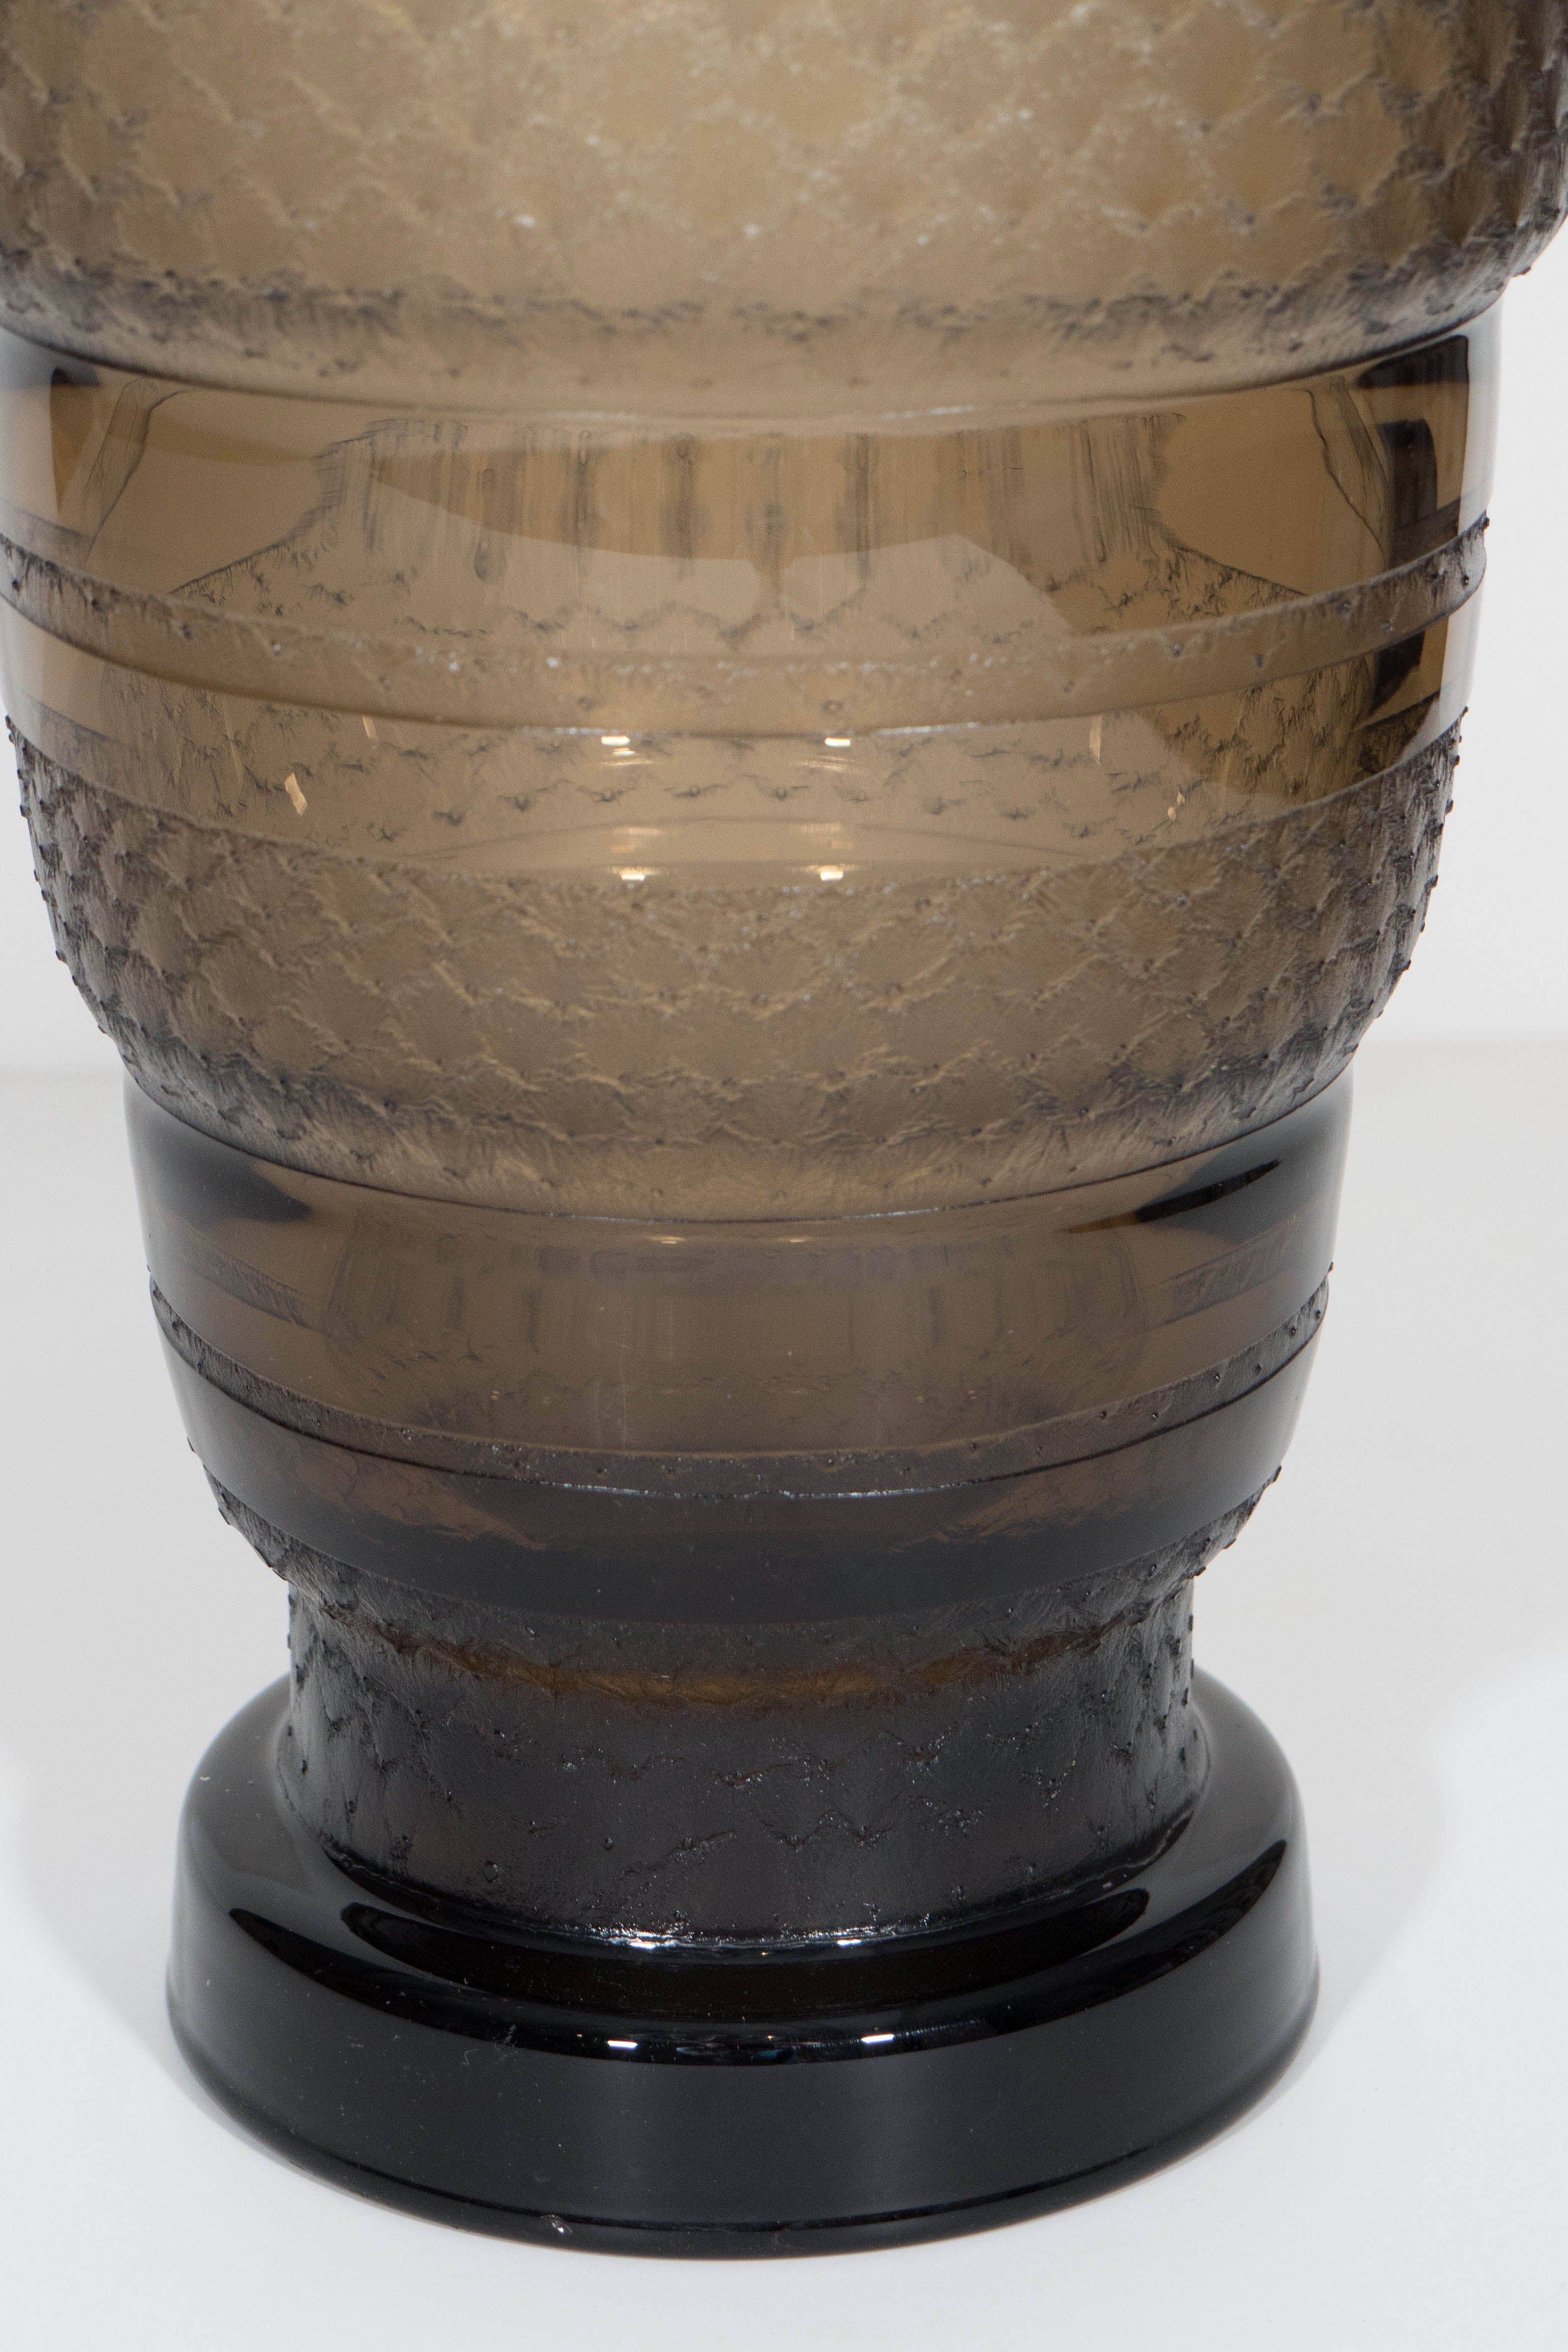 Italian cut-glass vase in an unusual smokey color.